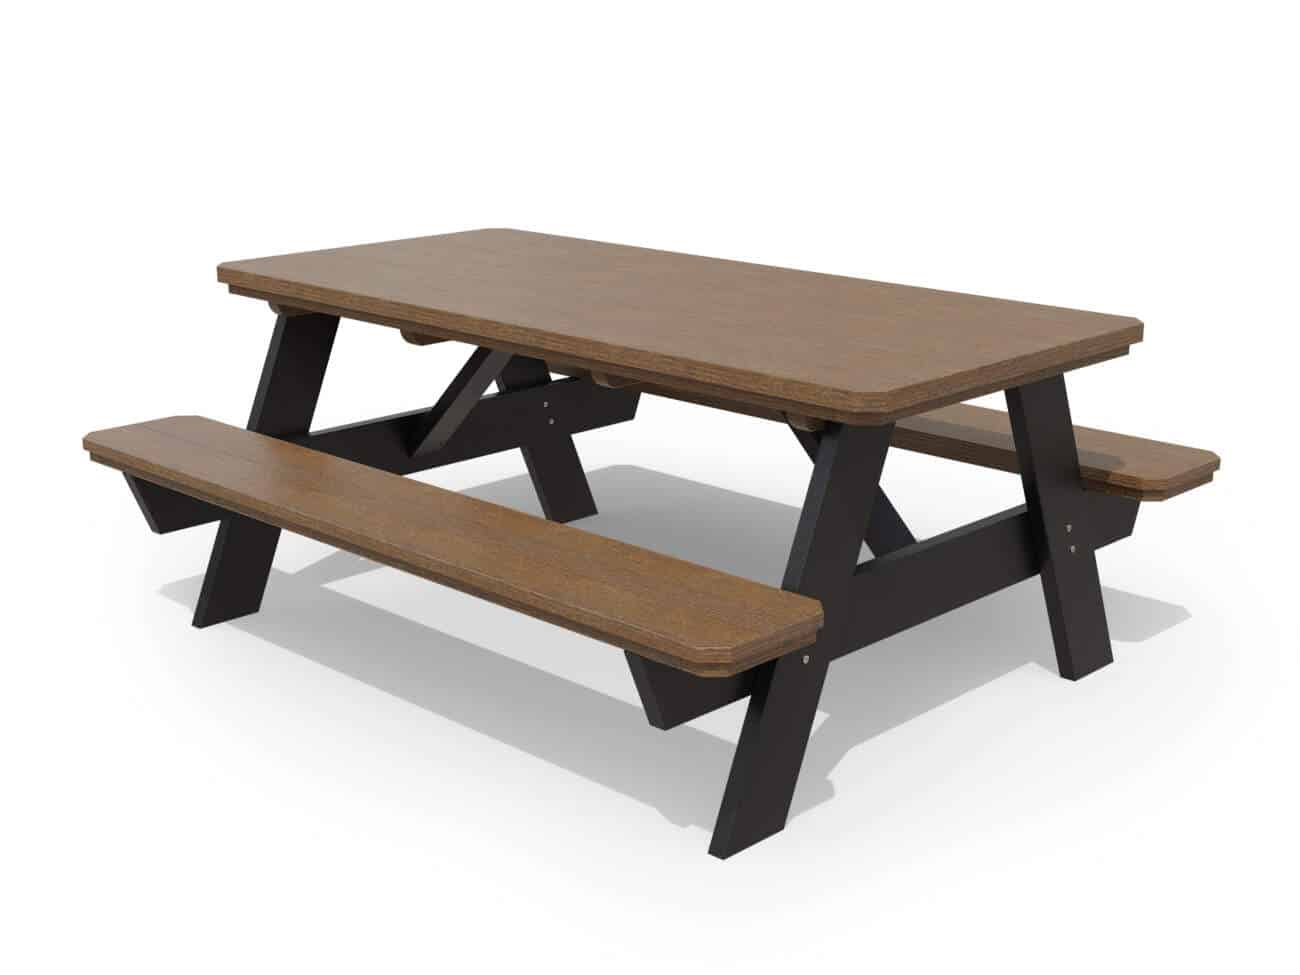 3x8 picnic table poly wood grain